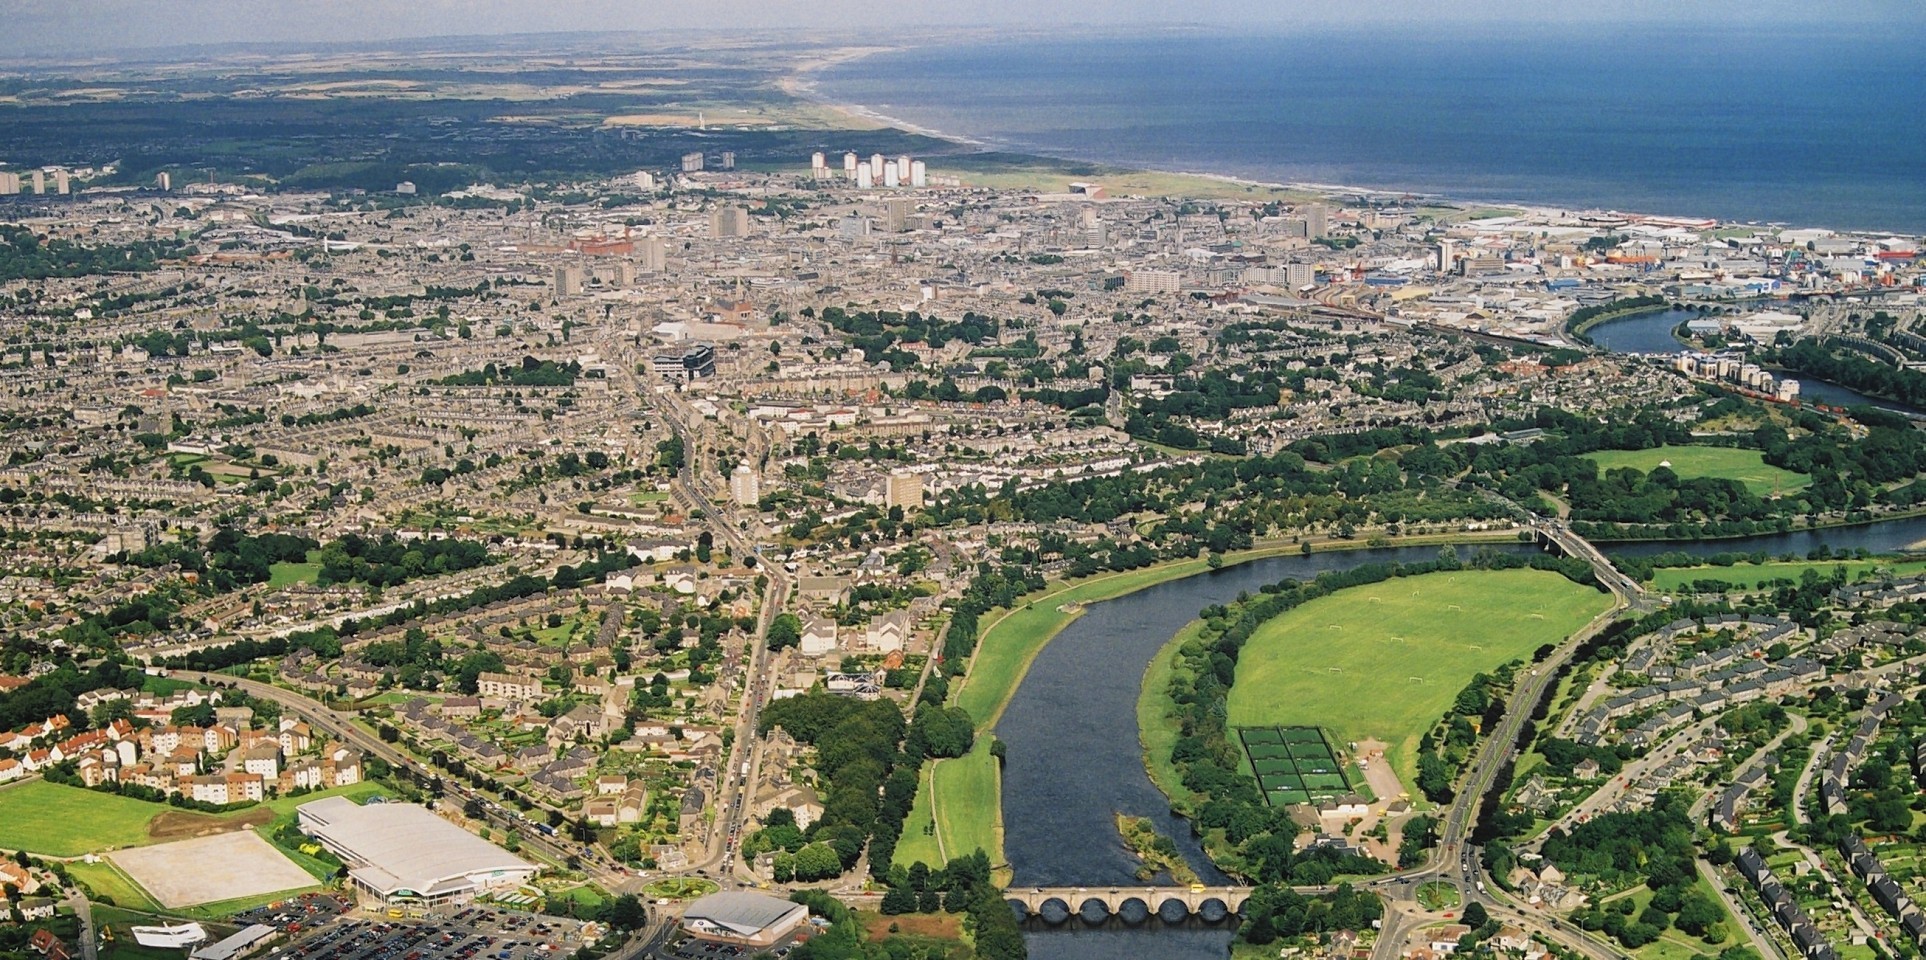 Aberdeen from the air.